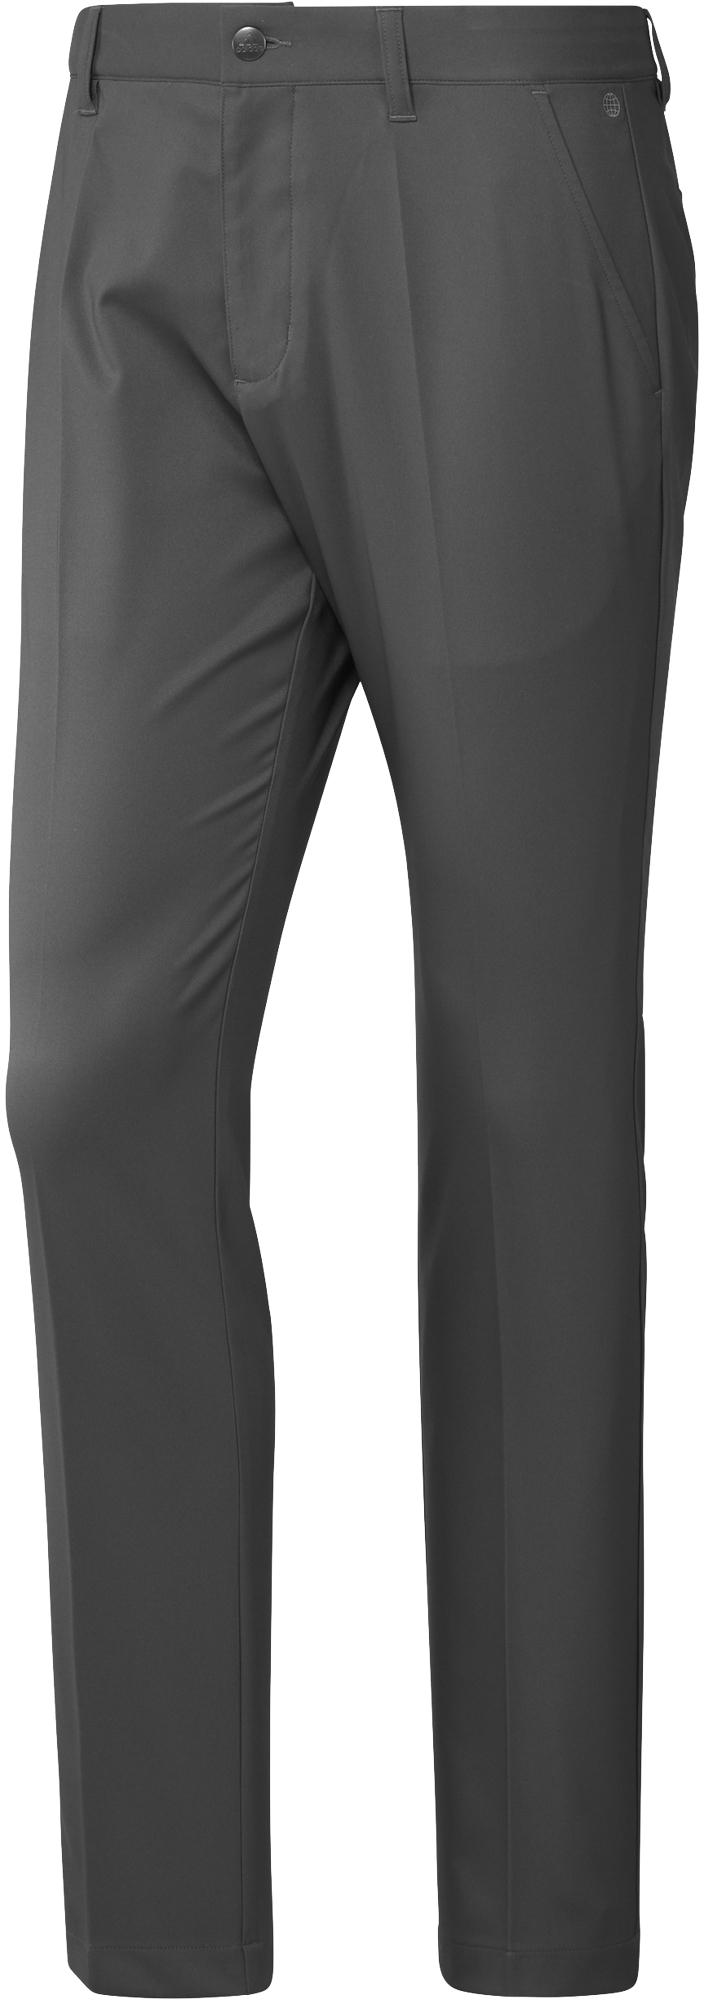 adidas Ultimate365 Primegreen Tapered Pant, grey five